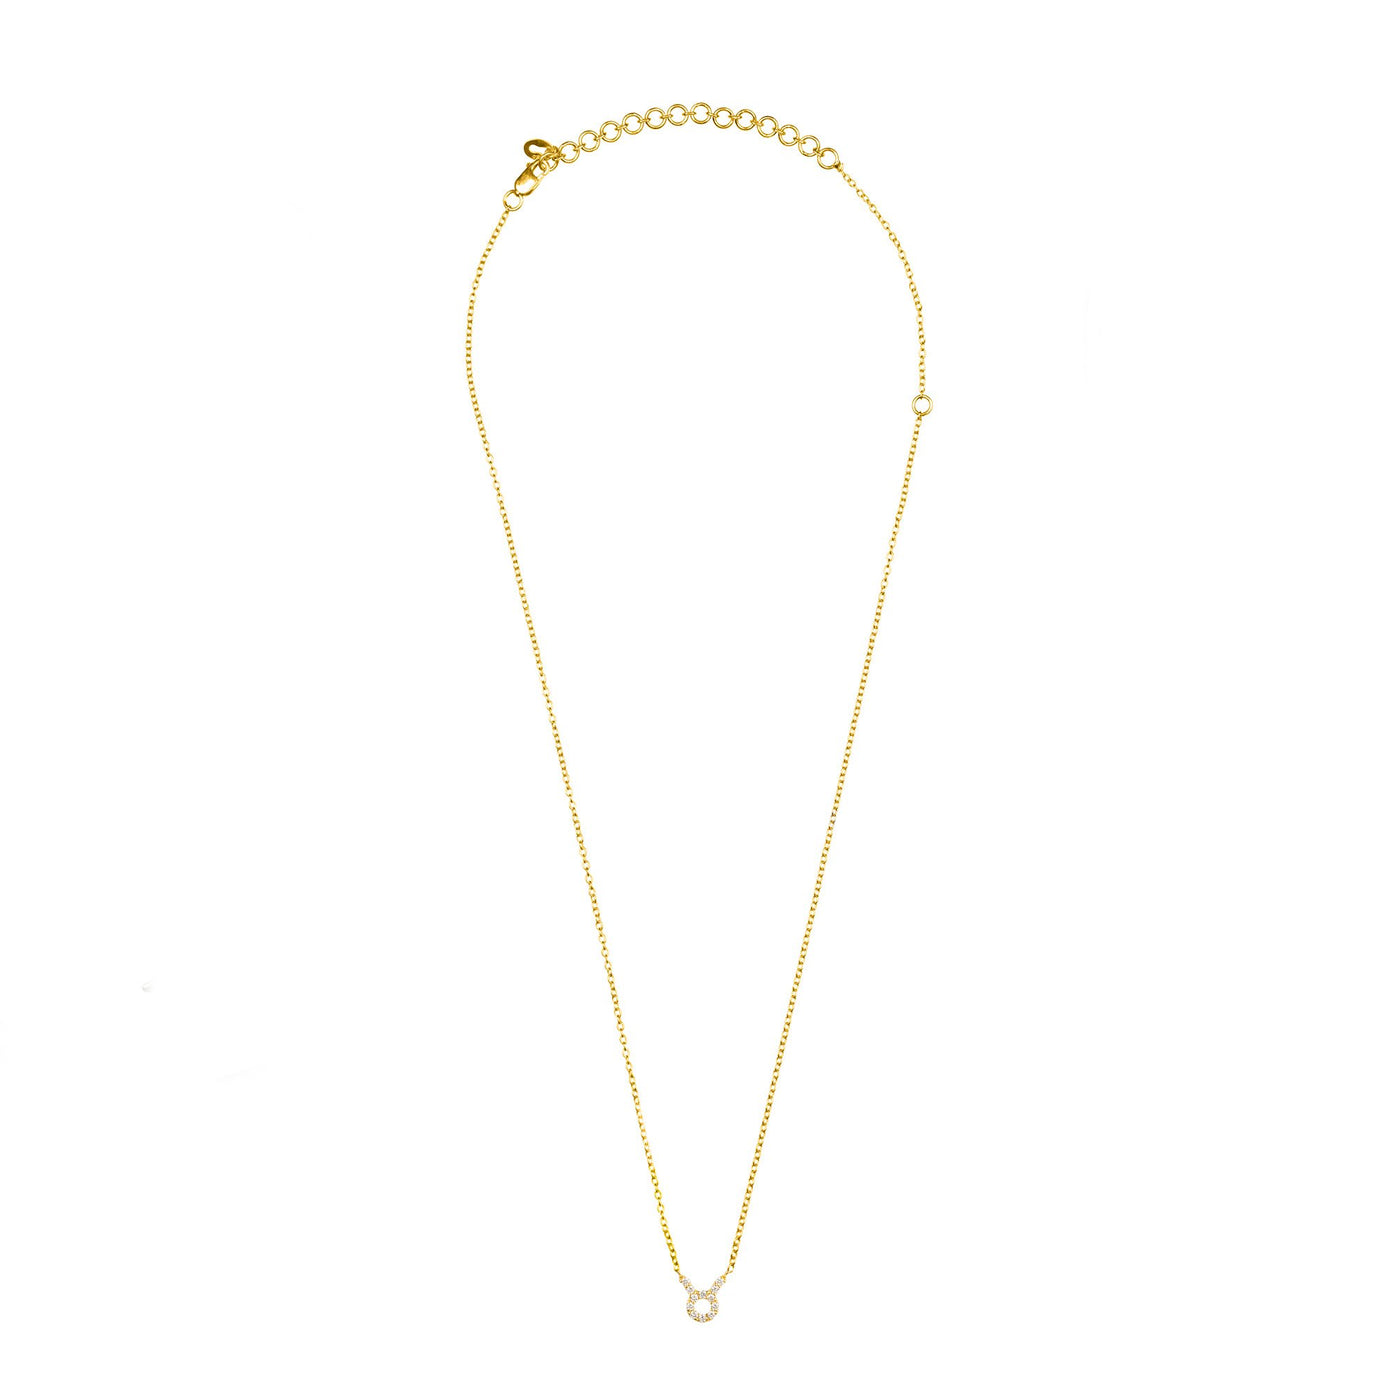 Taurus - necklace - 22 carat gold plated - diamonds